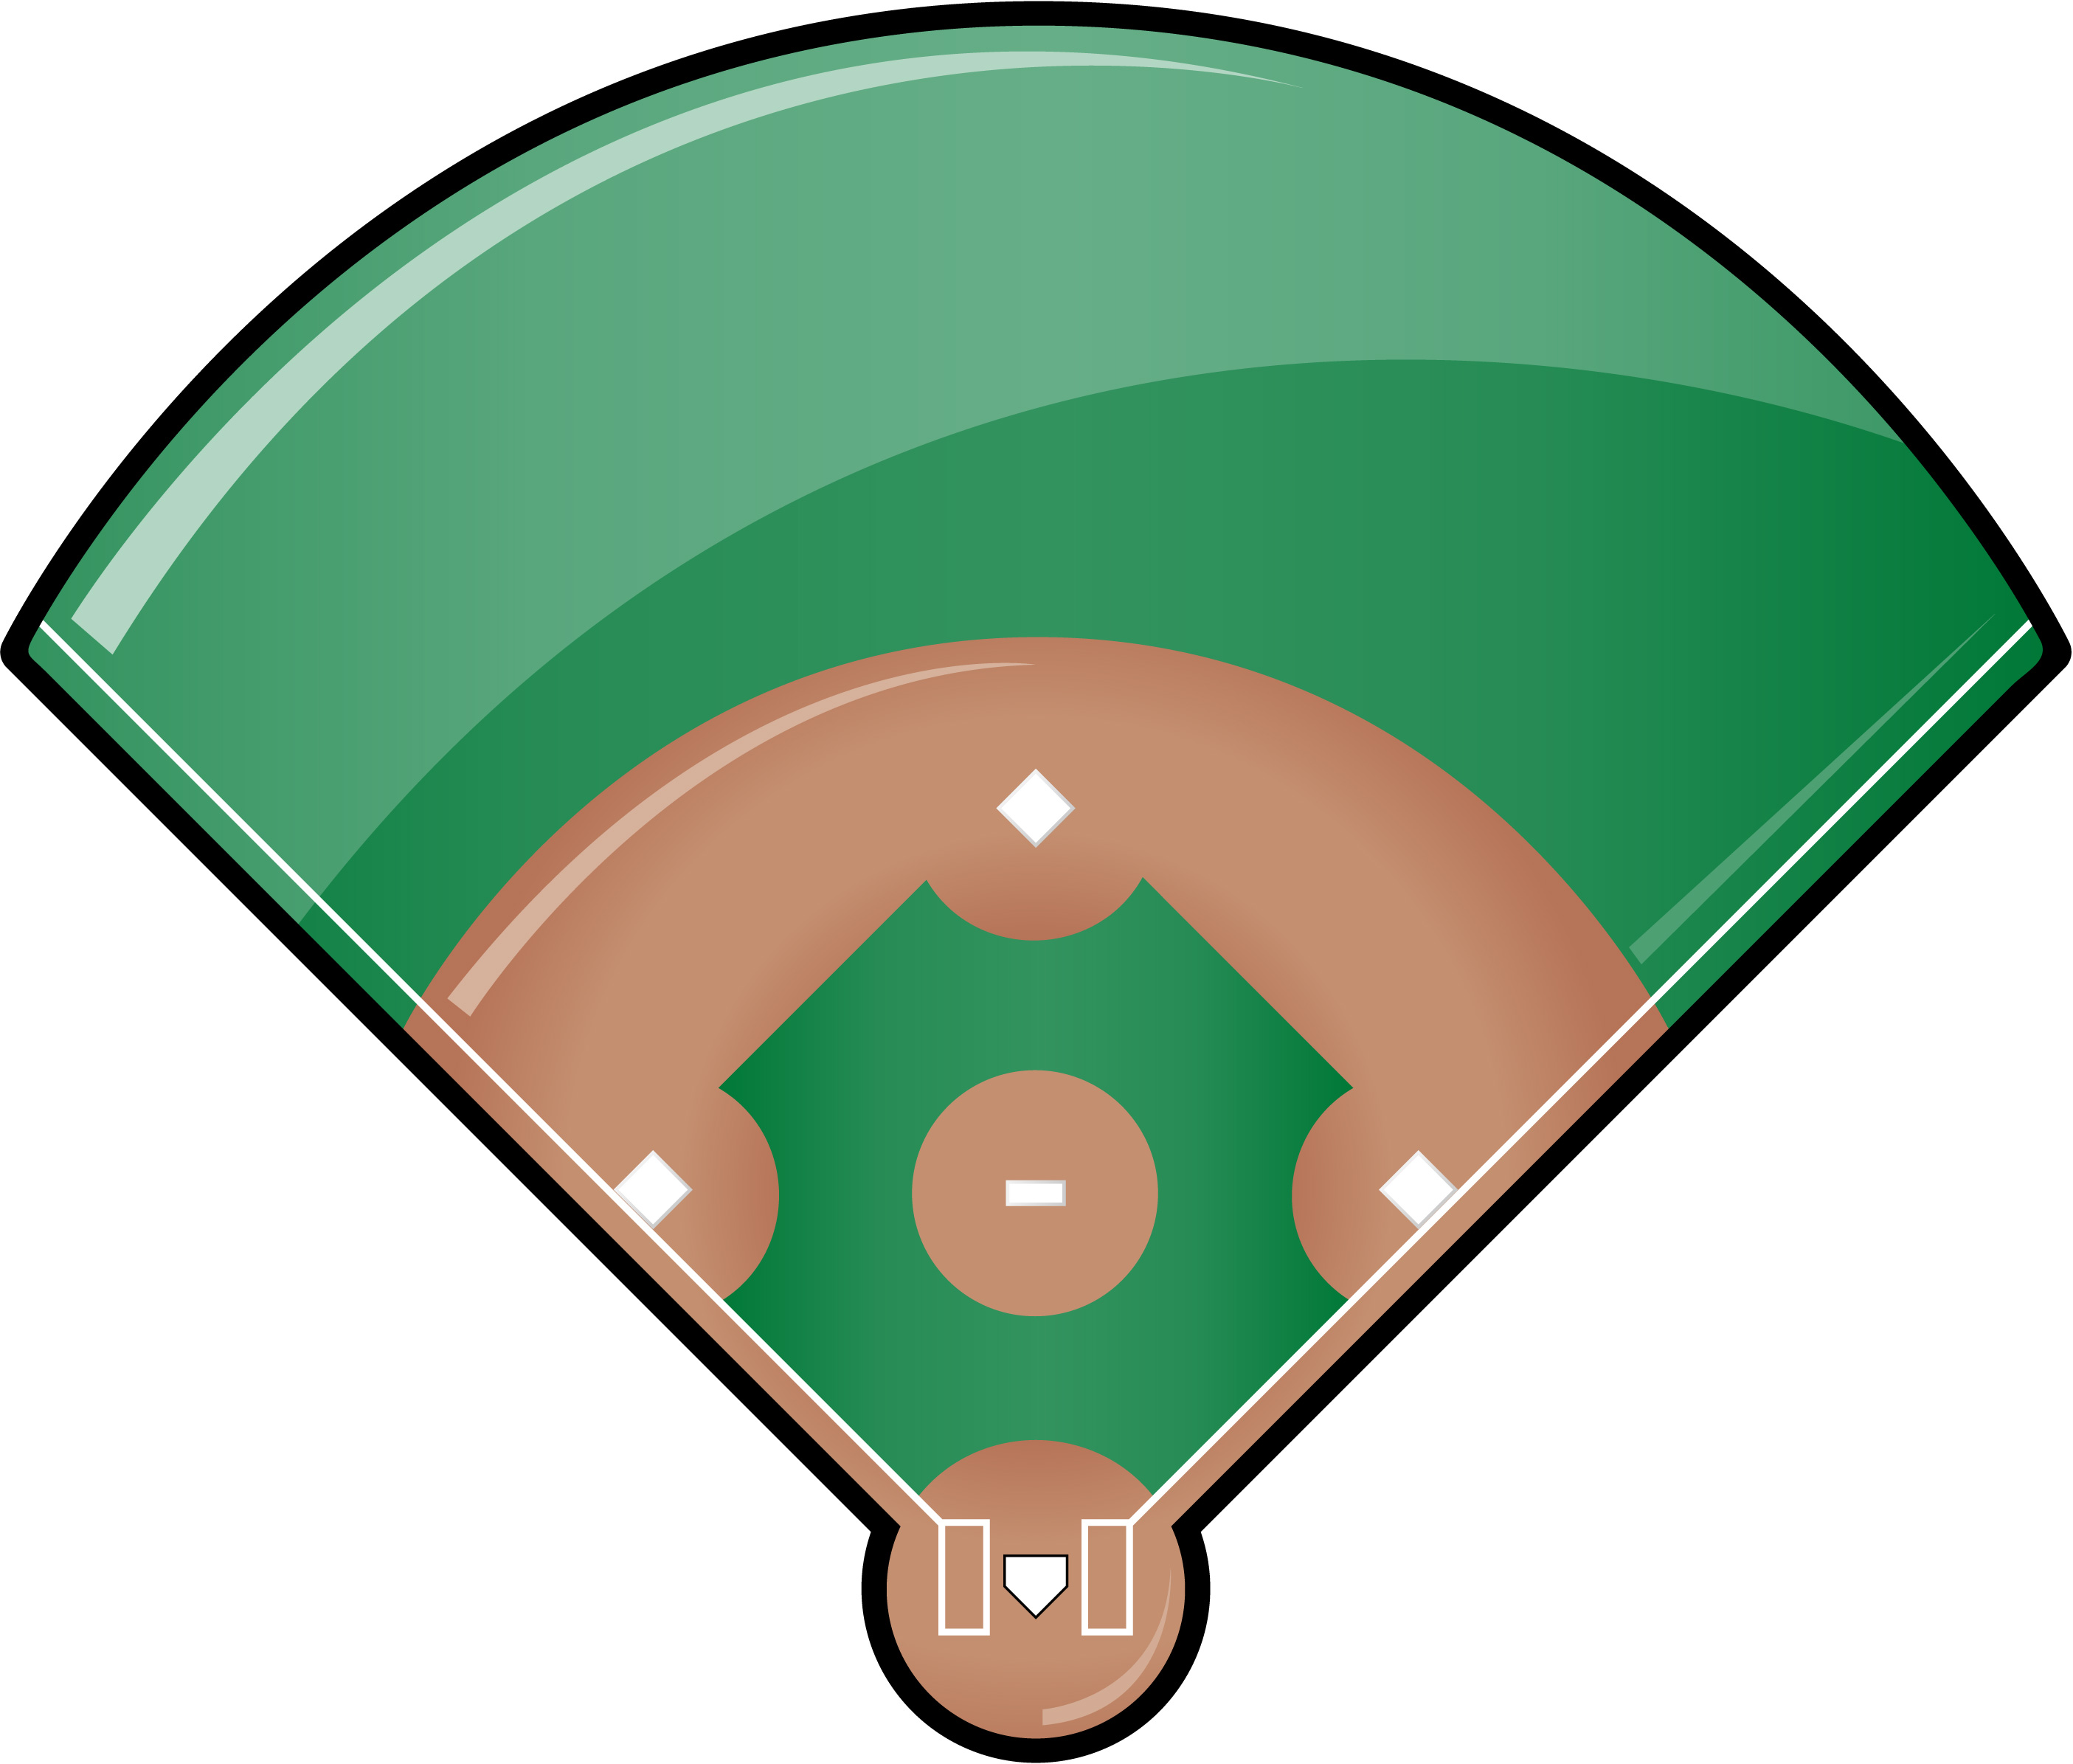 Baseball Diamond Diagram.